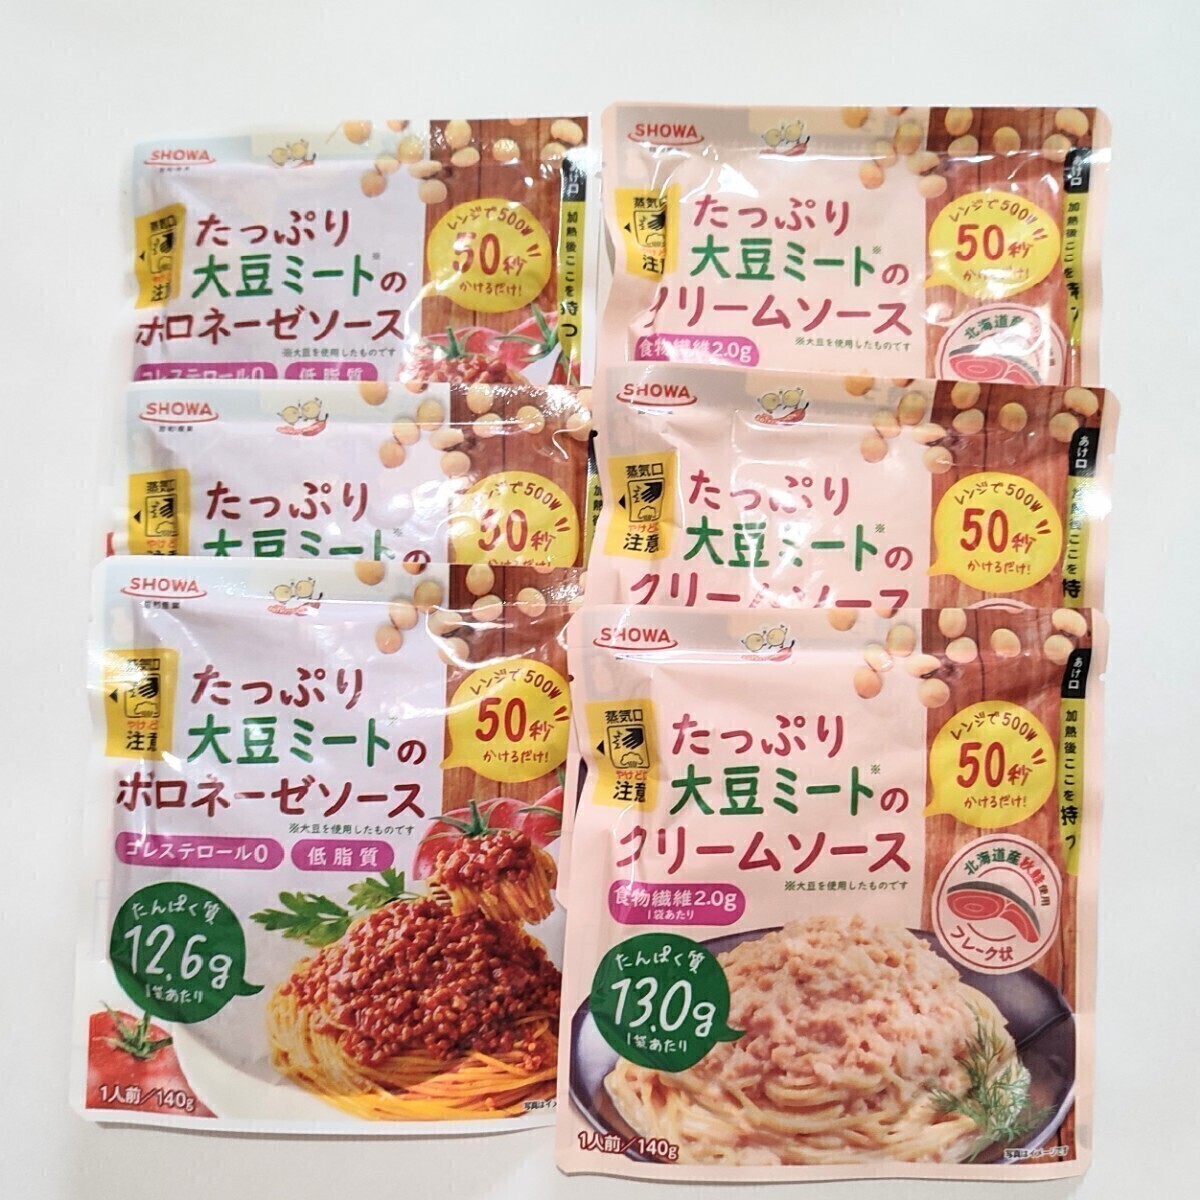 6 sack Showa era industry enough large legume mi-to. BORO ne-zeso- Scream sauce diet height protein quality rokabo low calorie soy protein 